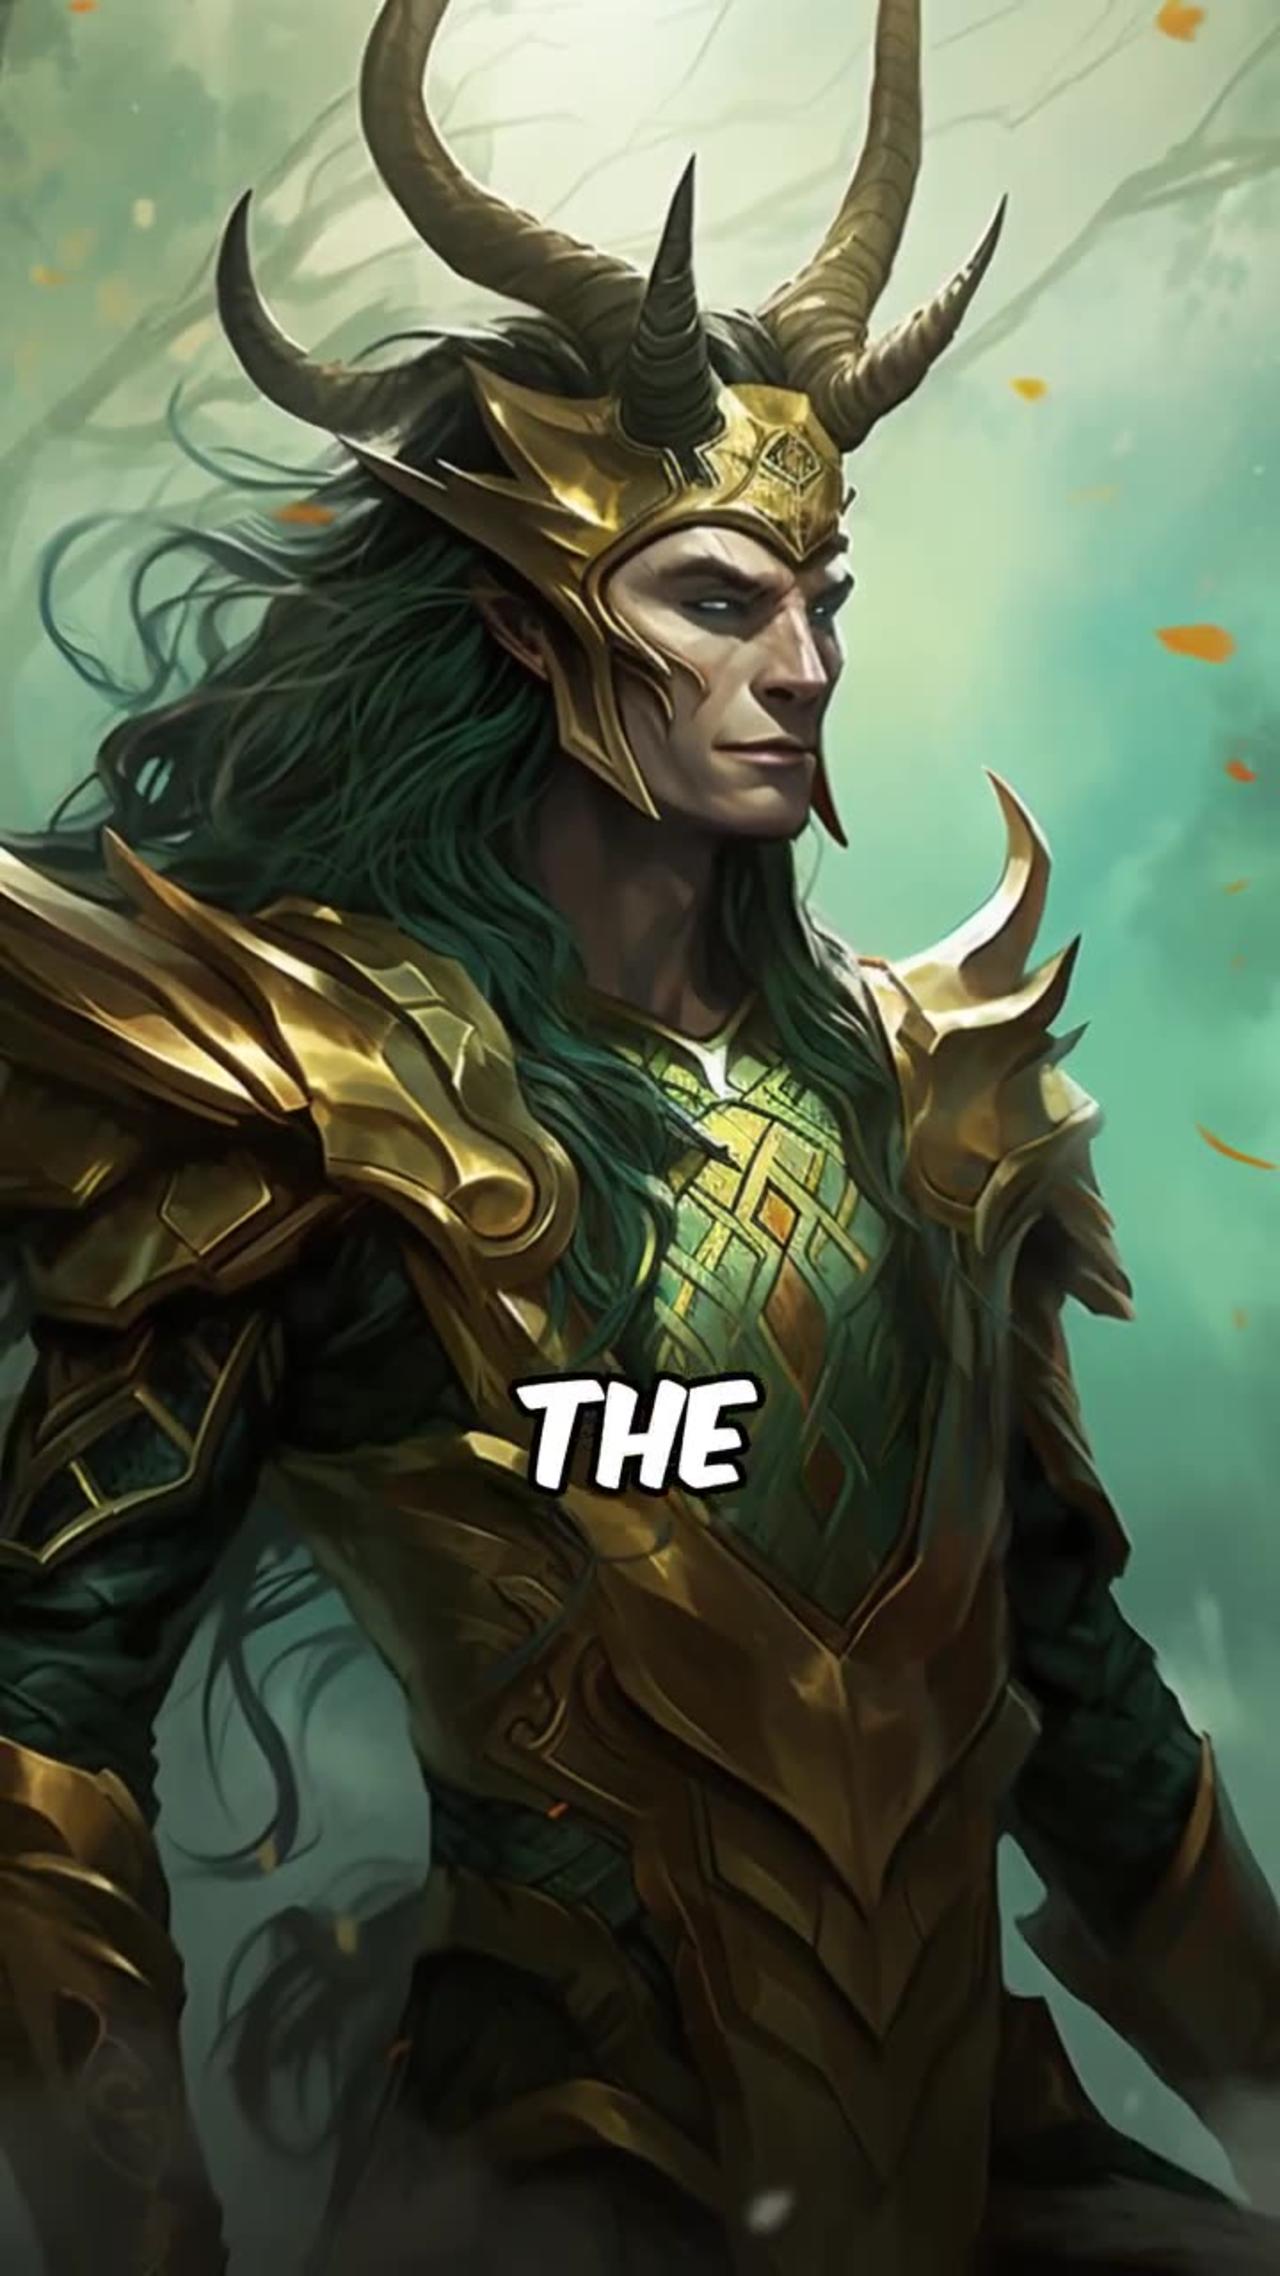 About Loki